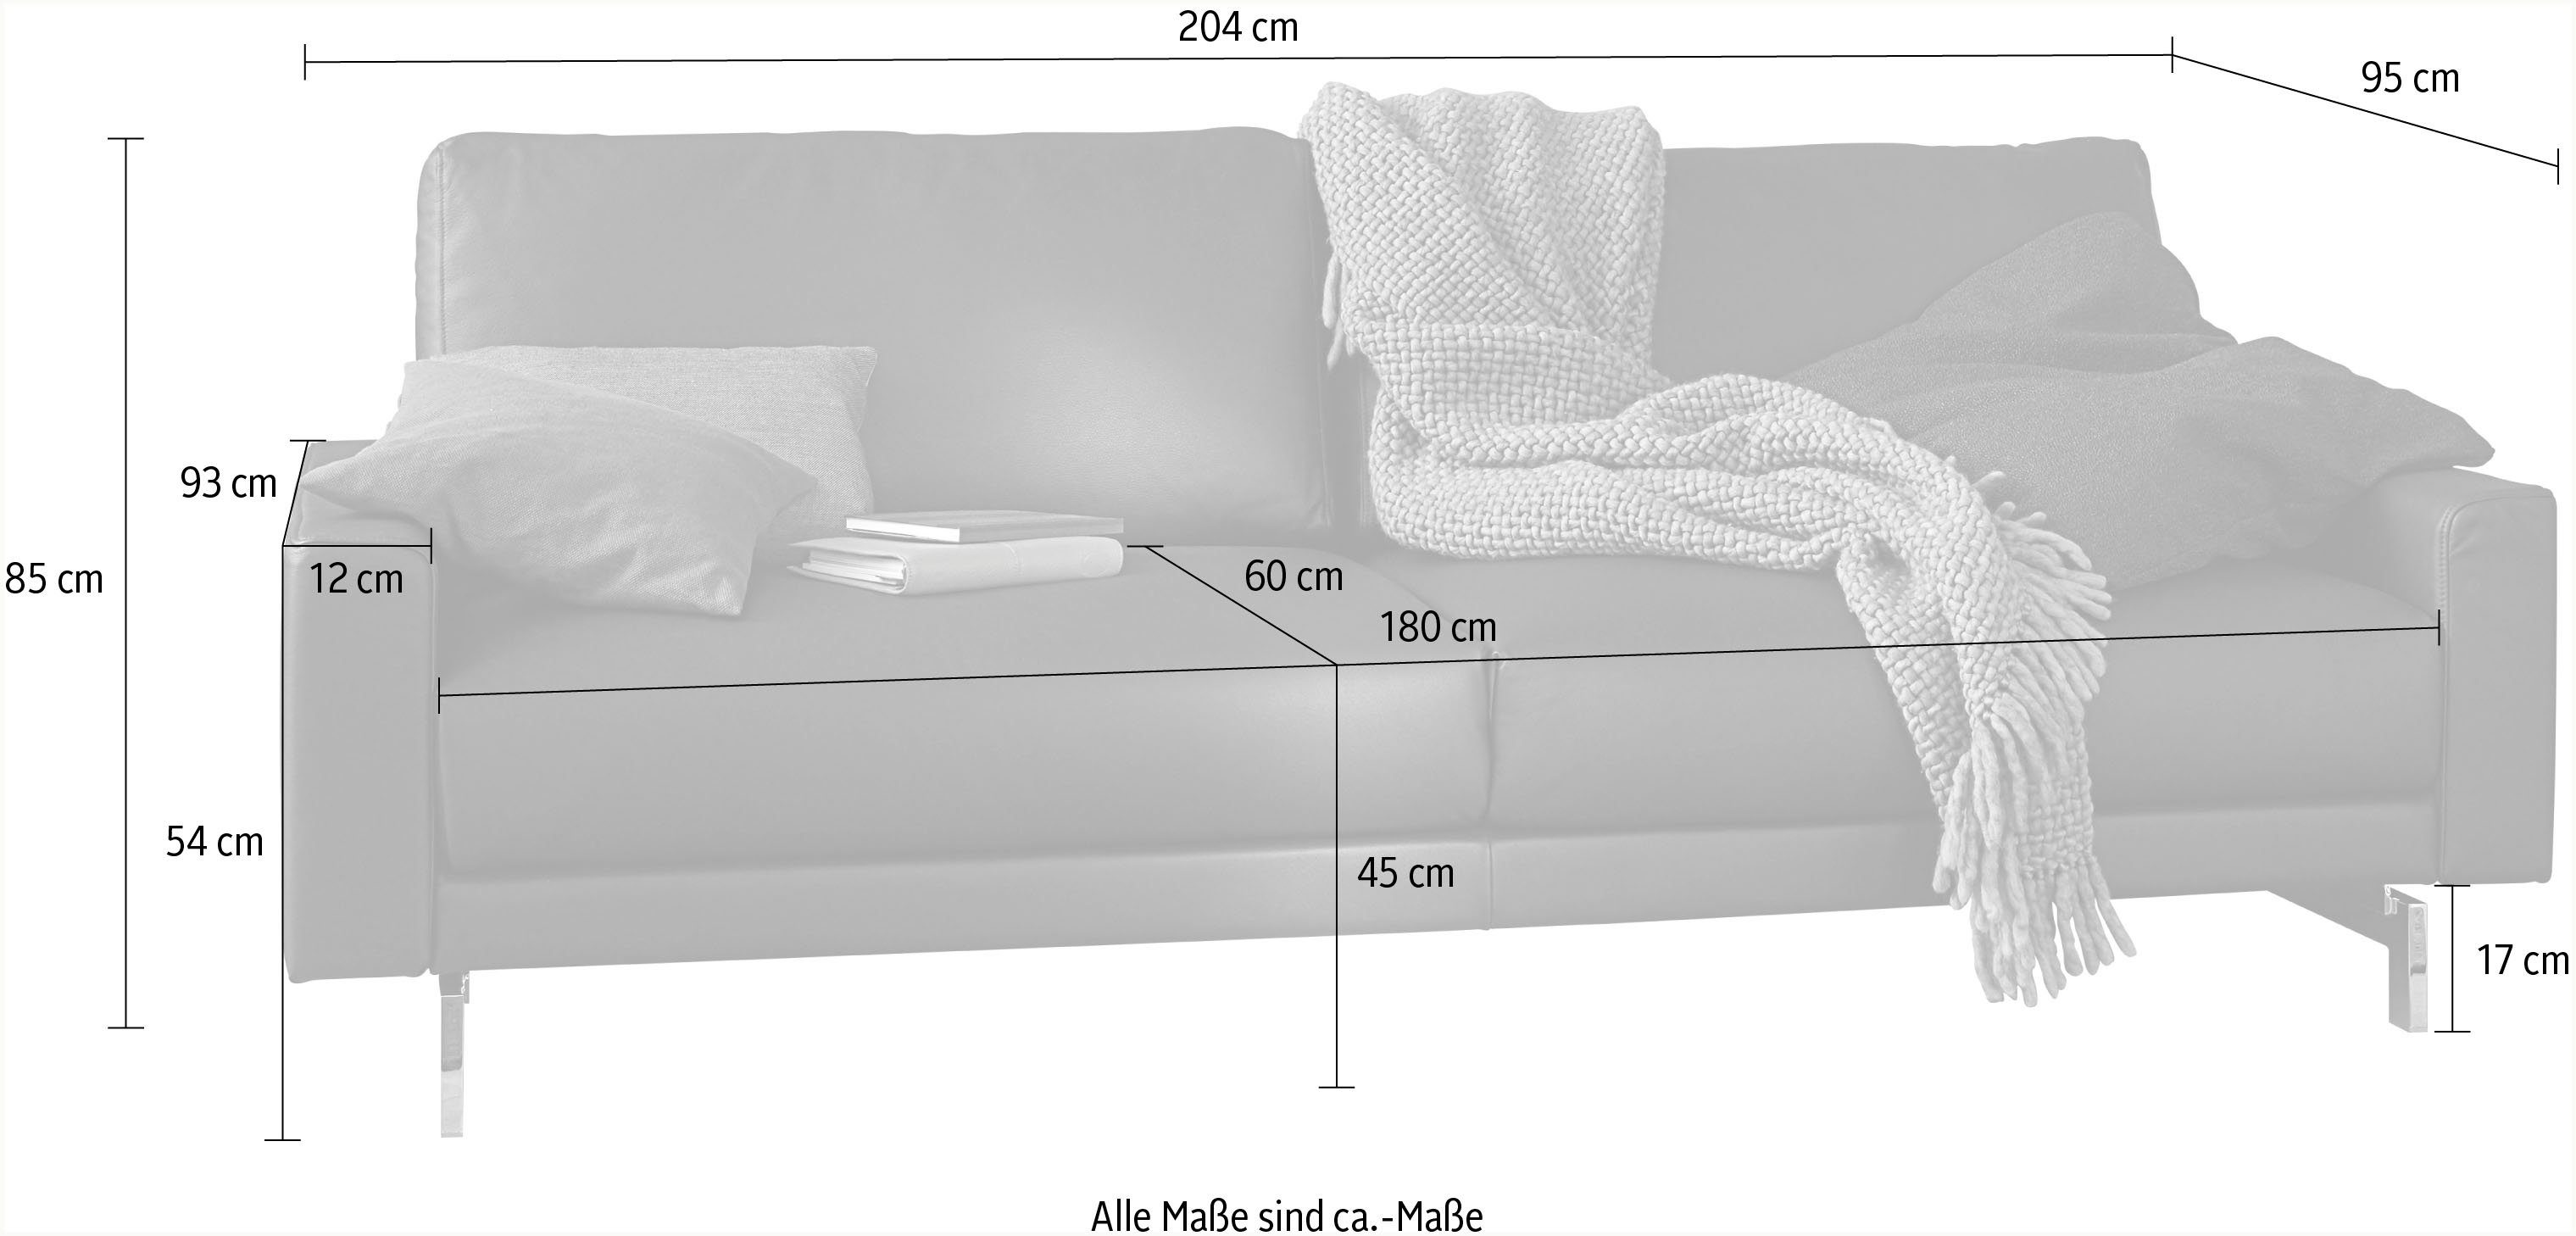 hülsta sofa 3-Sitzer cm hs.450, chromfarben 204 glänzend, Breite Armlehne niedrig, Fuß